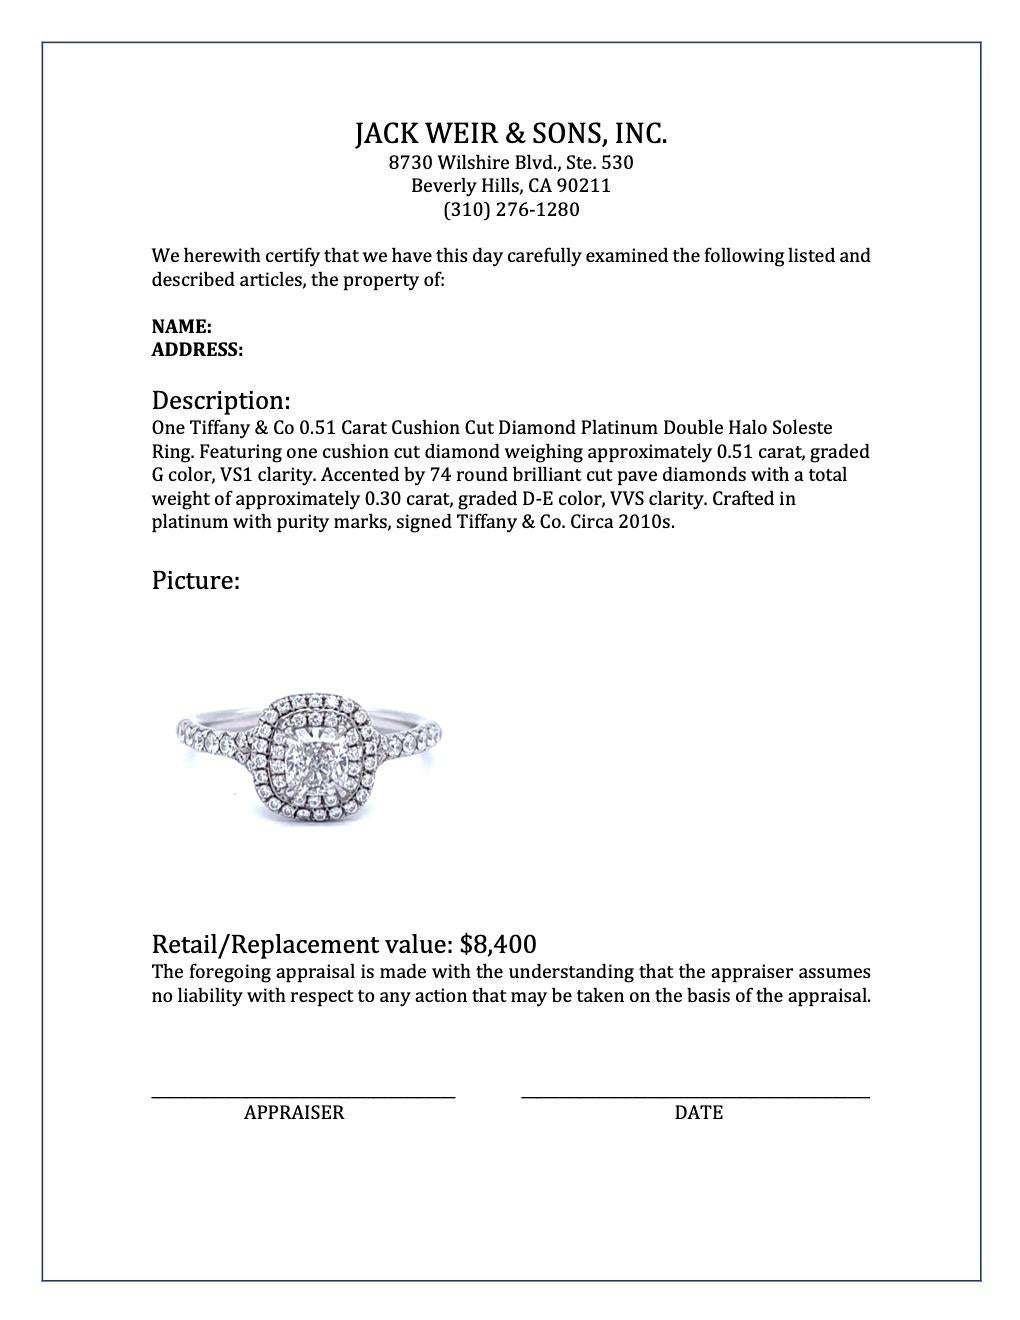 Tiffany & Co 0.51 Carat Cushion Cut Diamond Platinum Double Halo Soleste Ring 1